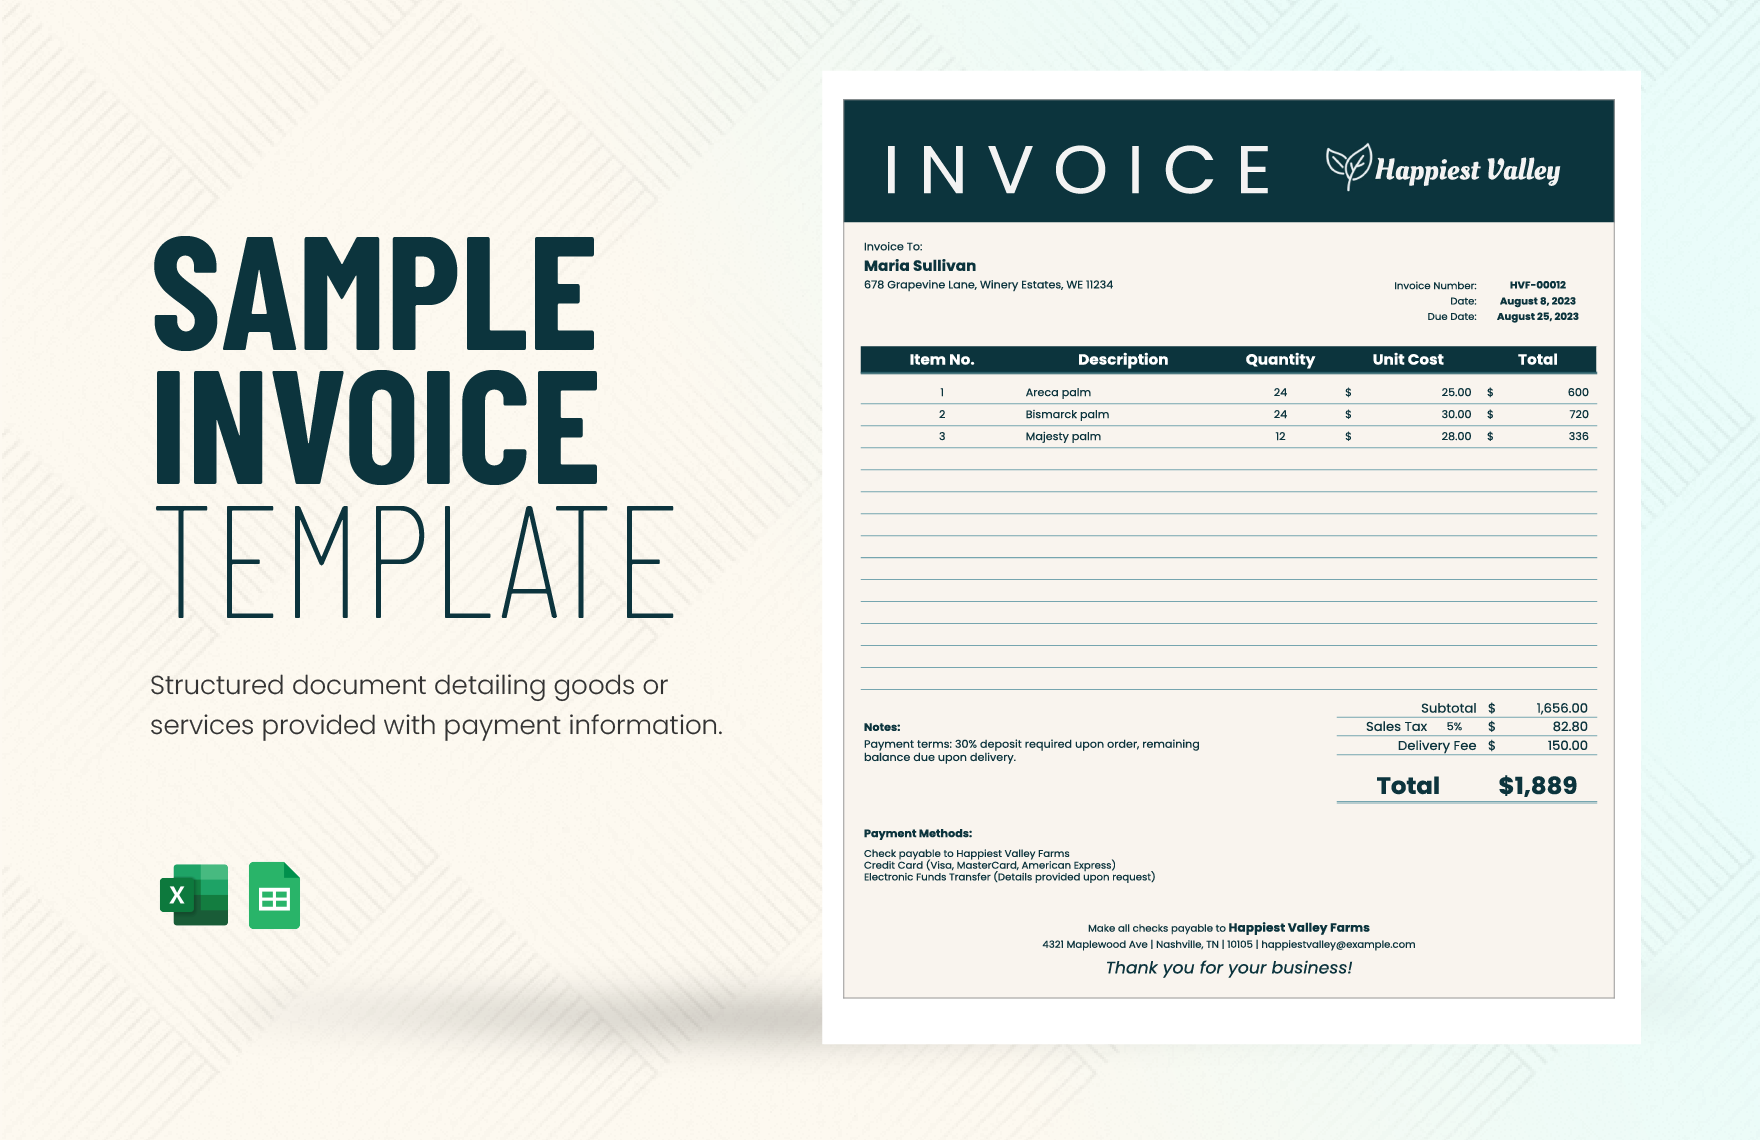 Sample Invoice Template